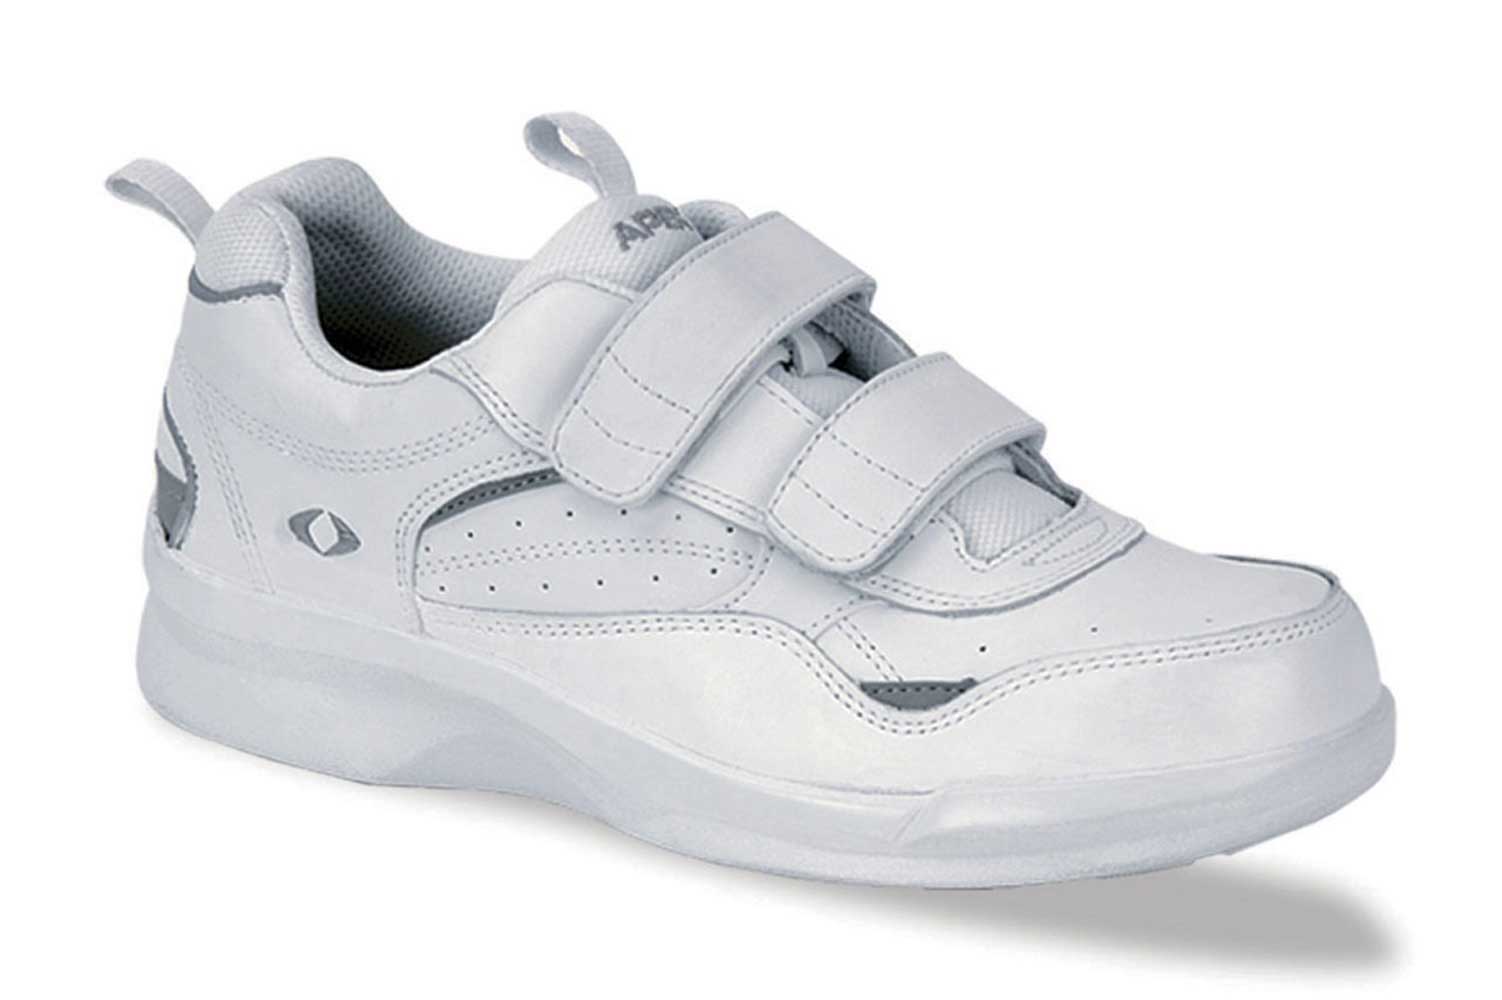 Apex Ambulator Shoes G8210M Biomechanical Atheltic Shoe - Men's Comfort Therapeutic Diabetic Shoe - Medium - Extra Wide - Extra Depth For Orthotics